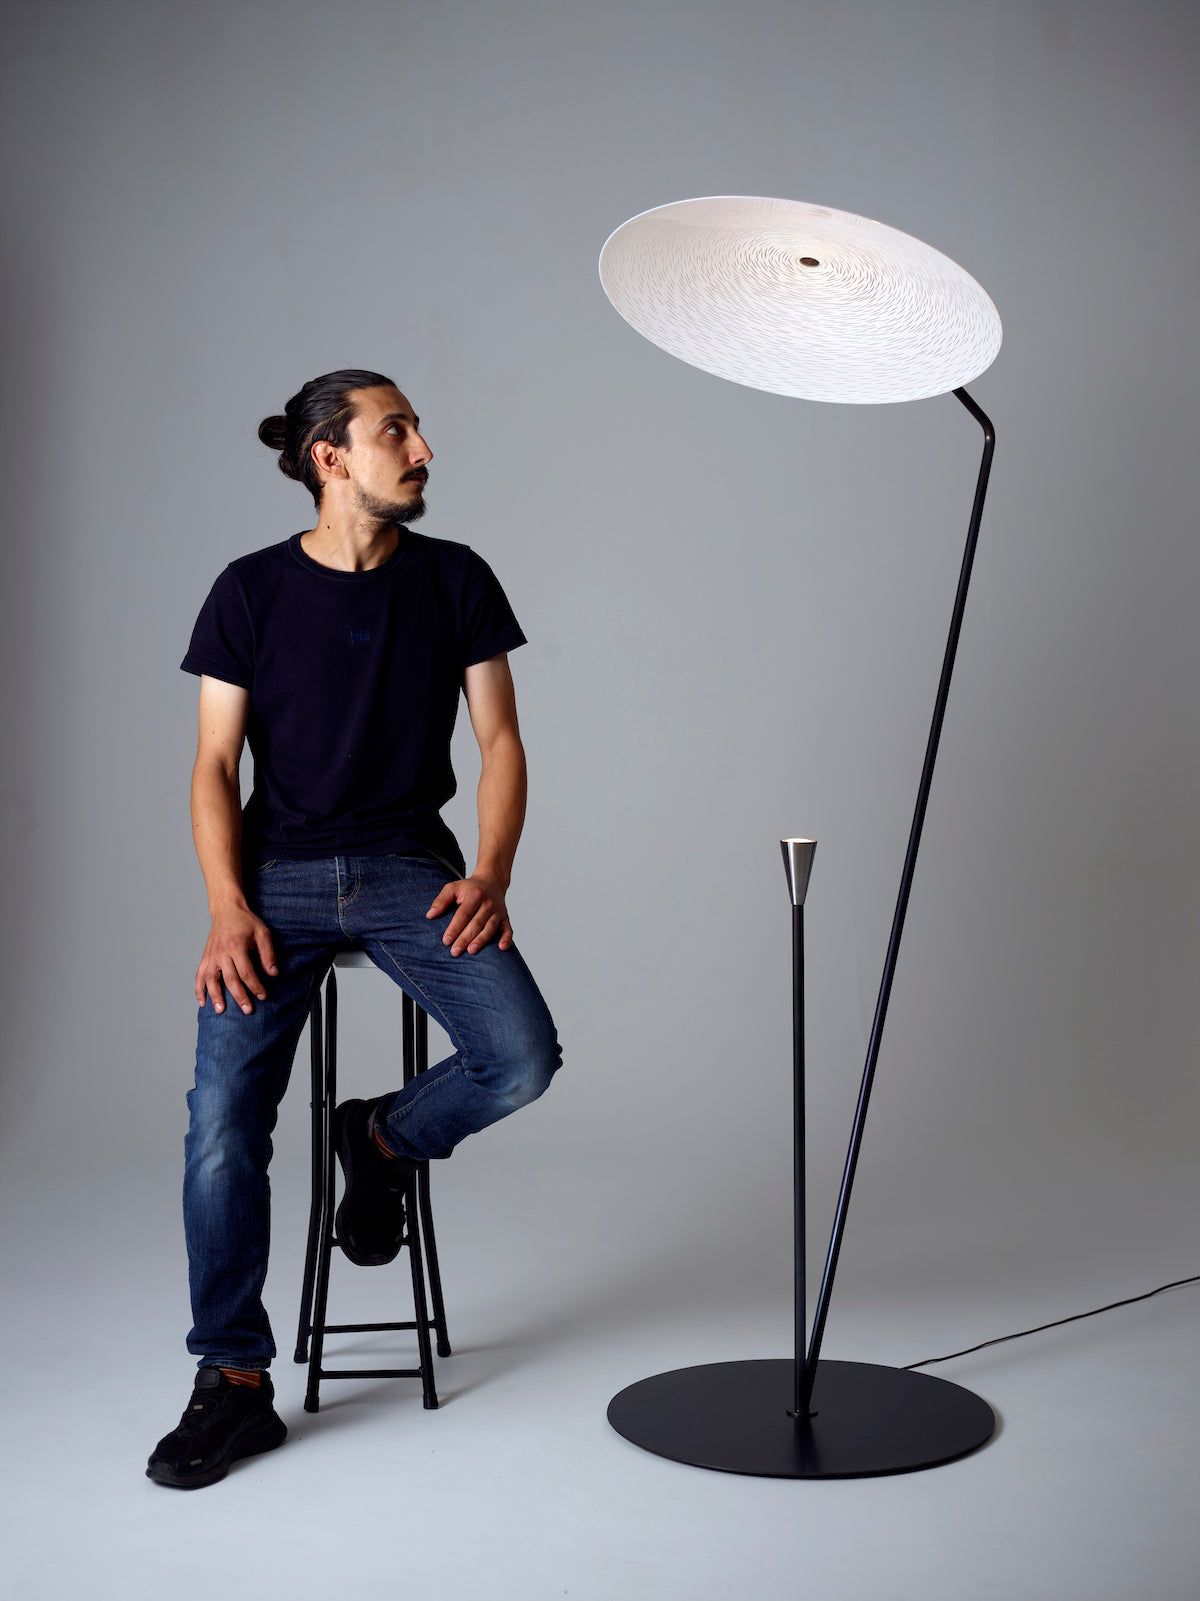 Nova lamp by Atelier Stokowski